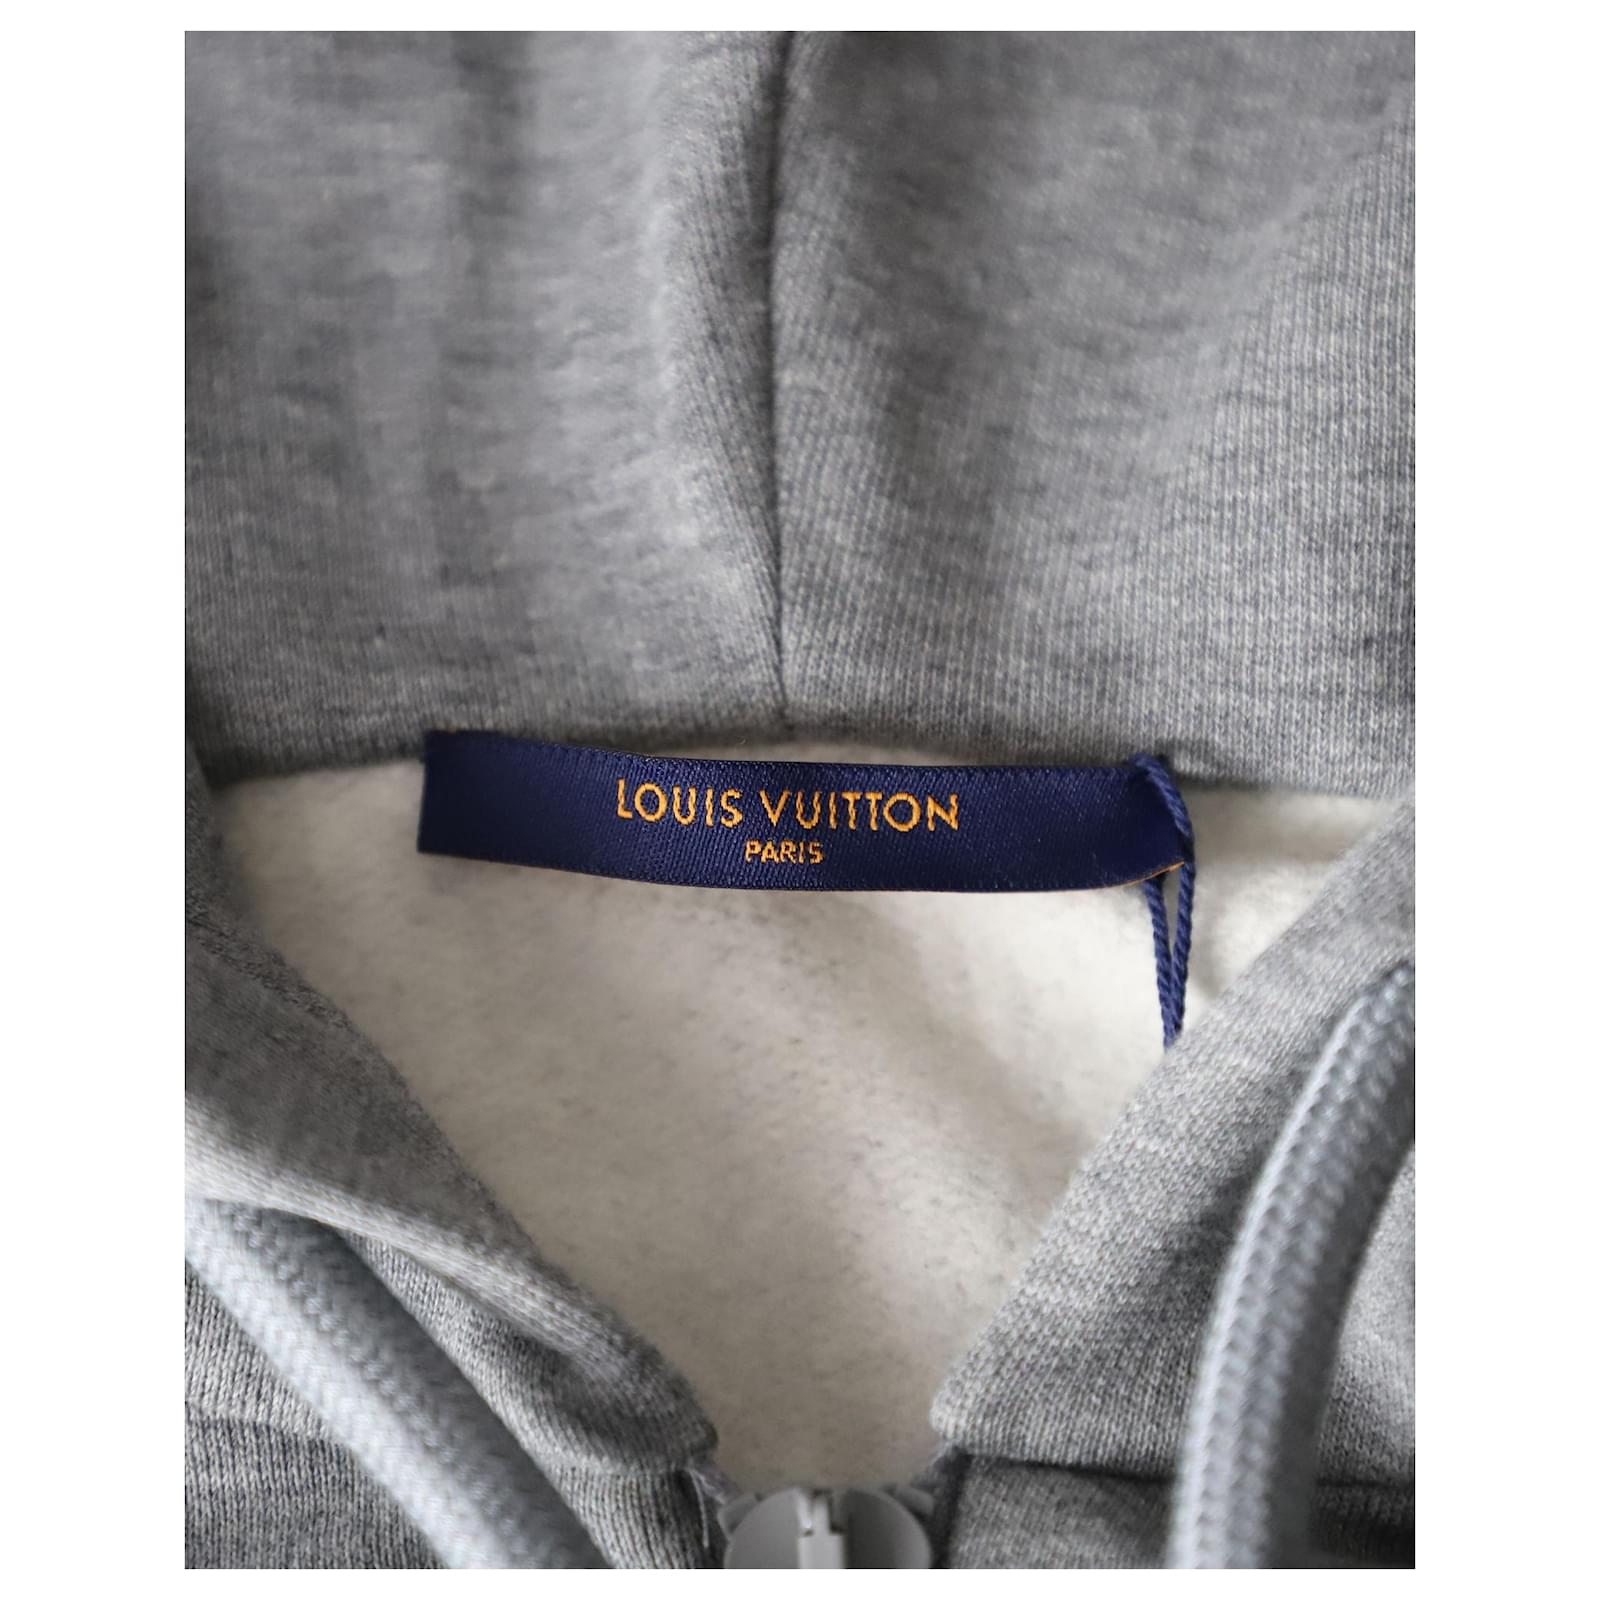 Louis Vuitton Monogram 3d Effect Print Hoodie And Pants - Tagotee